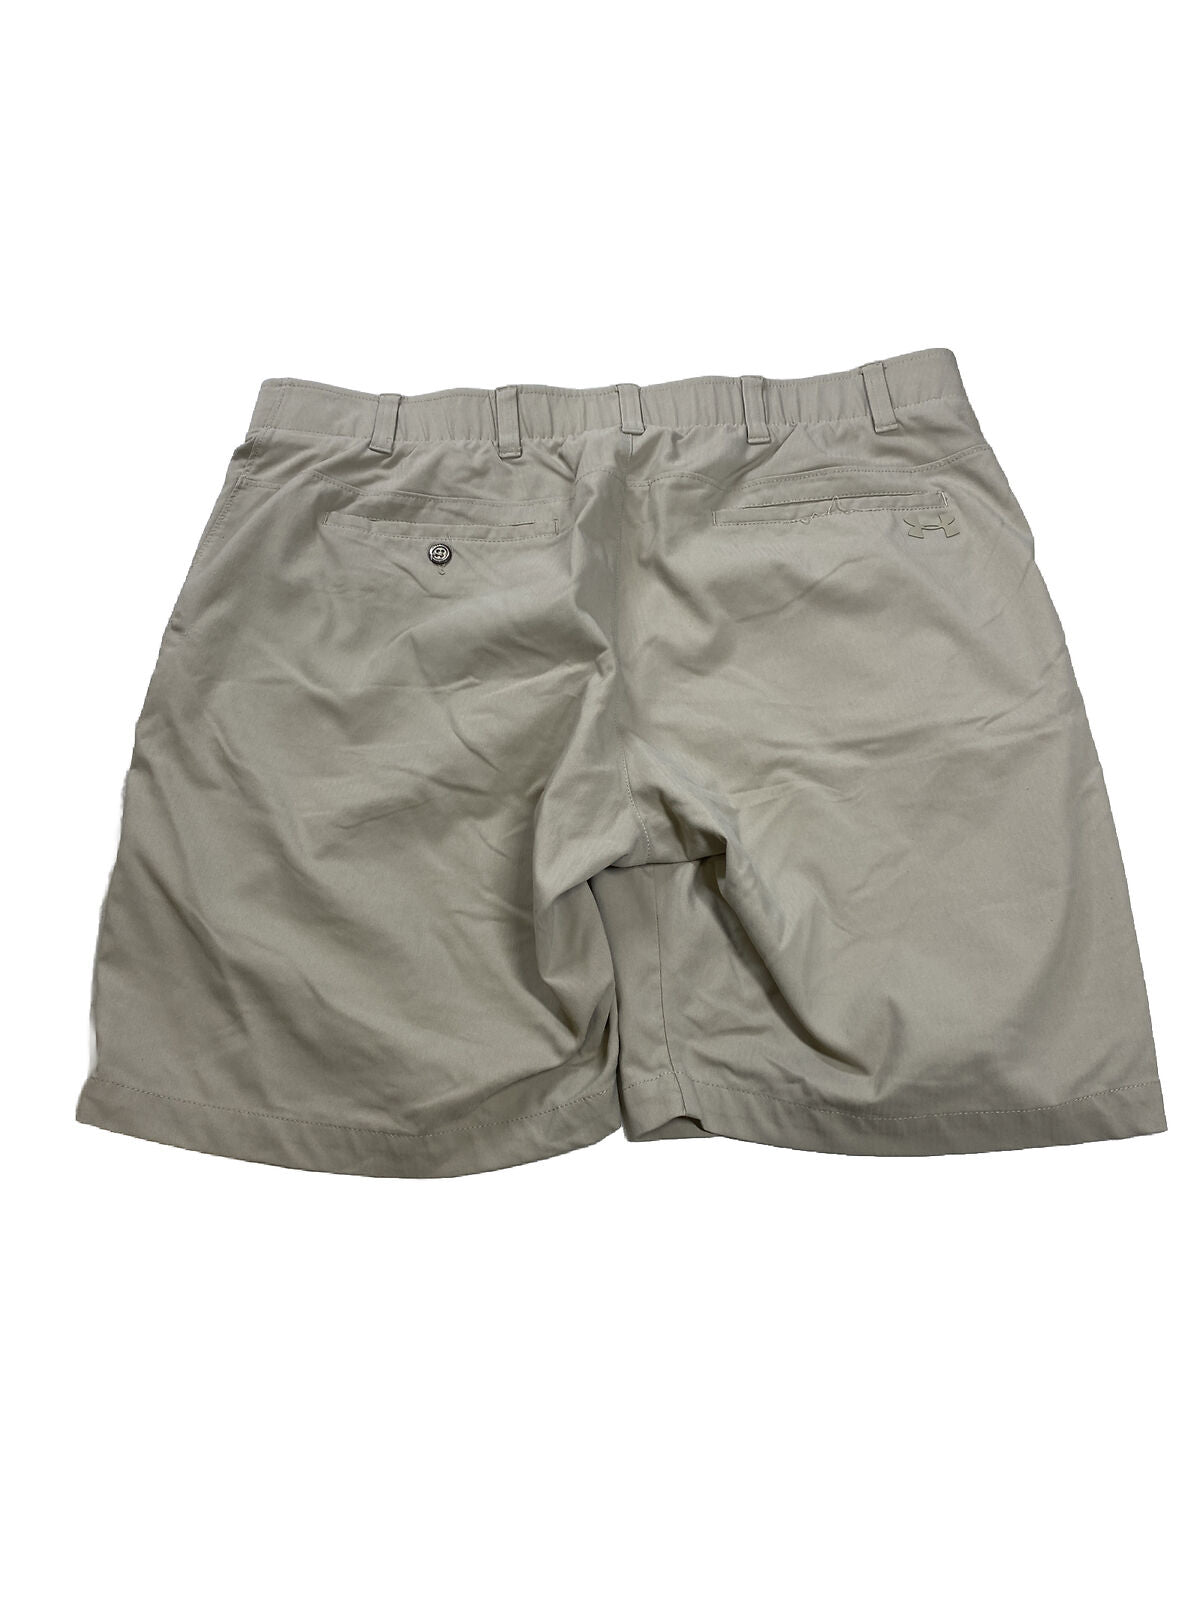 Under Armour Pantalones cortos de golf Showdown beige para hombre - 40